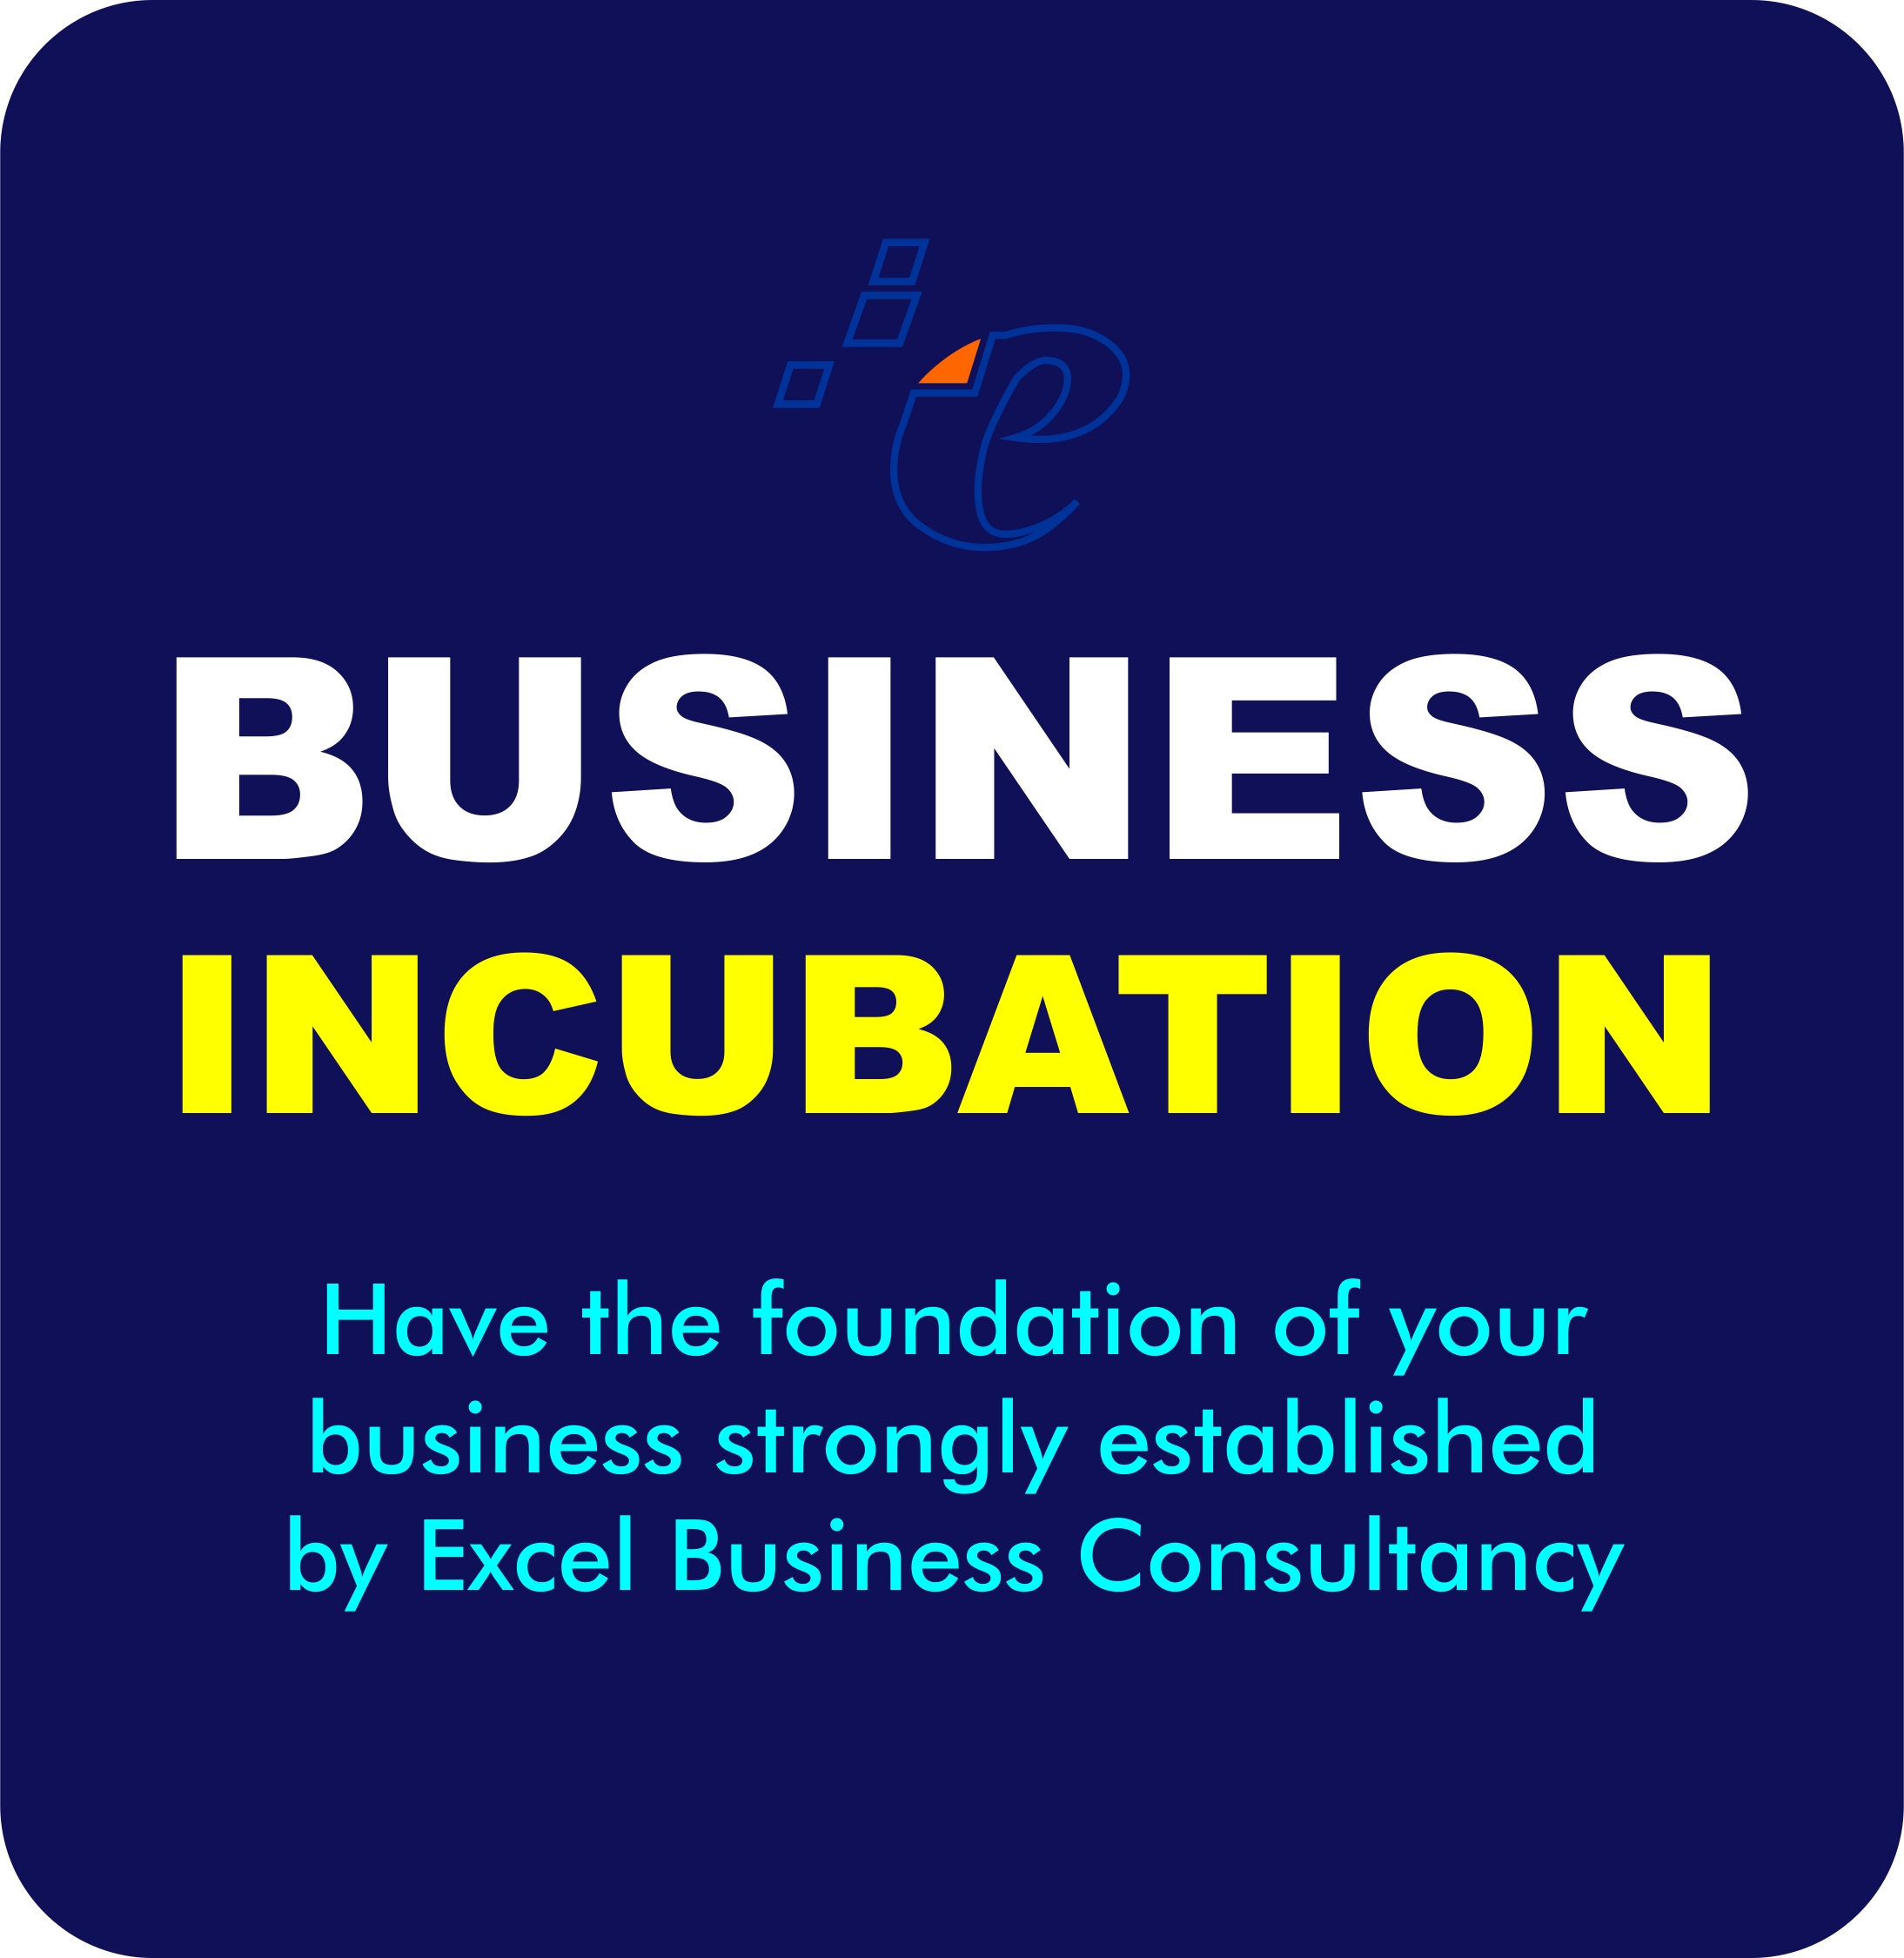 Business Incubation